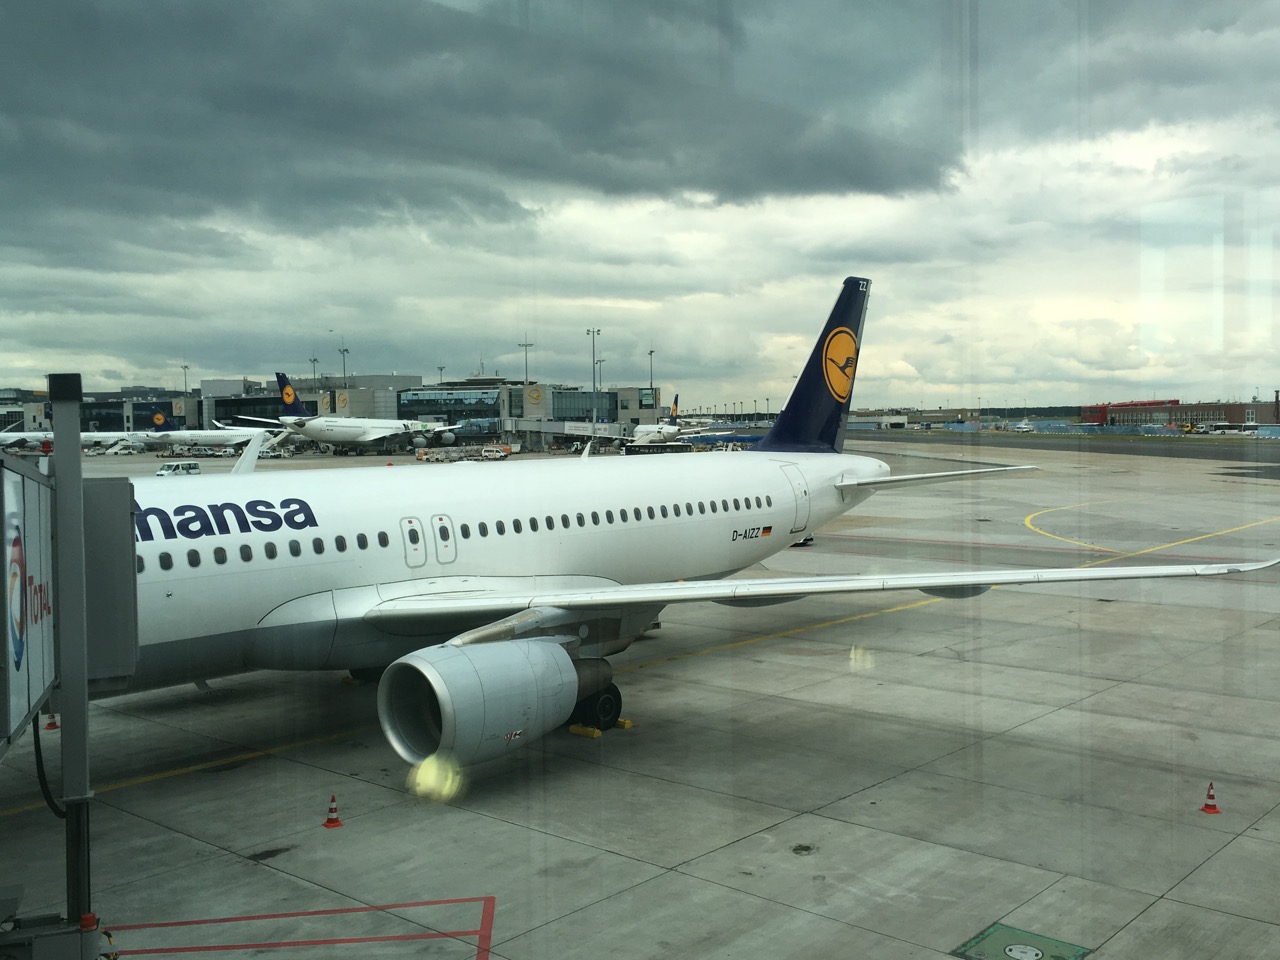 Lufthansa A320